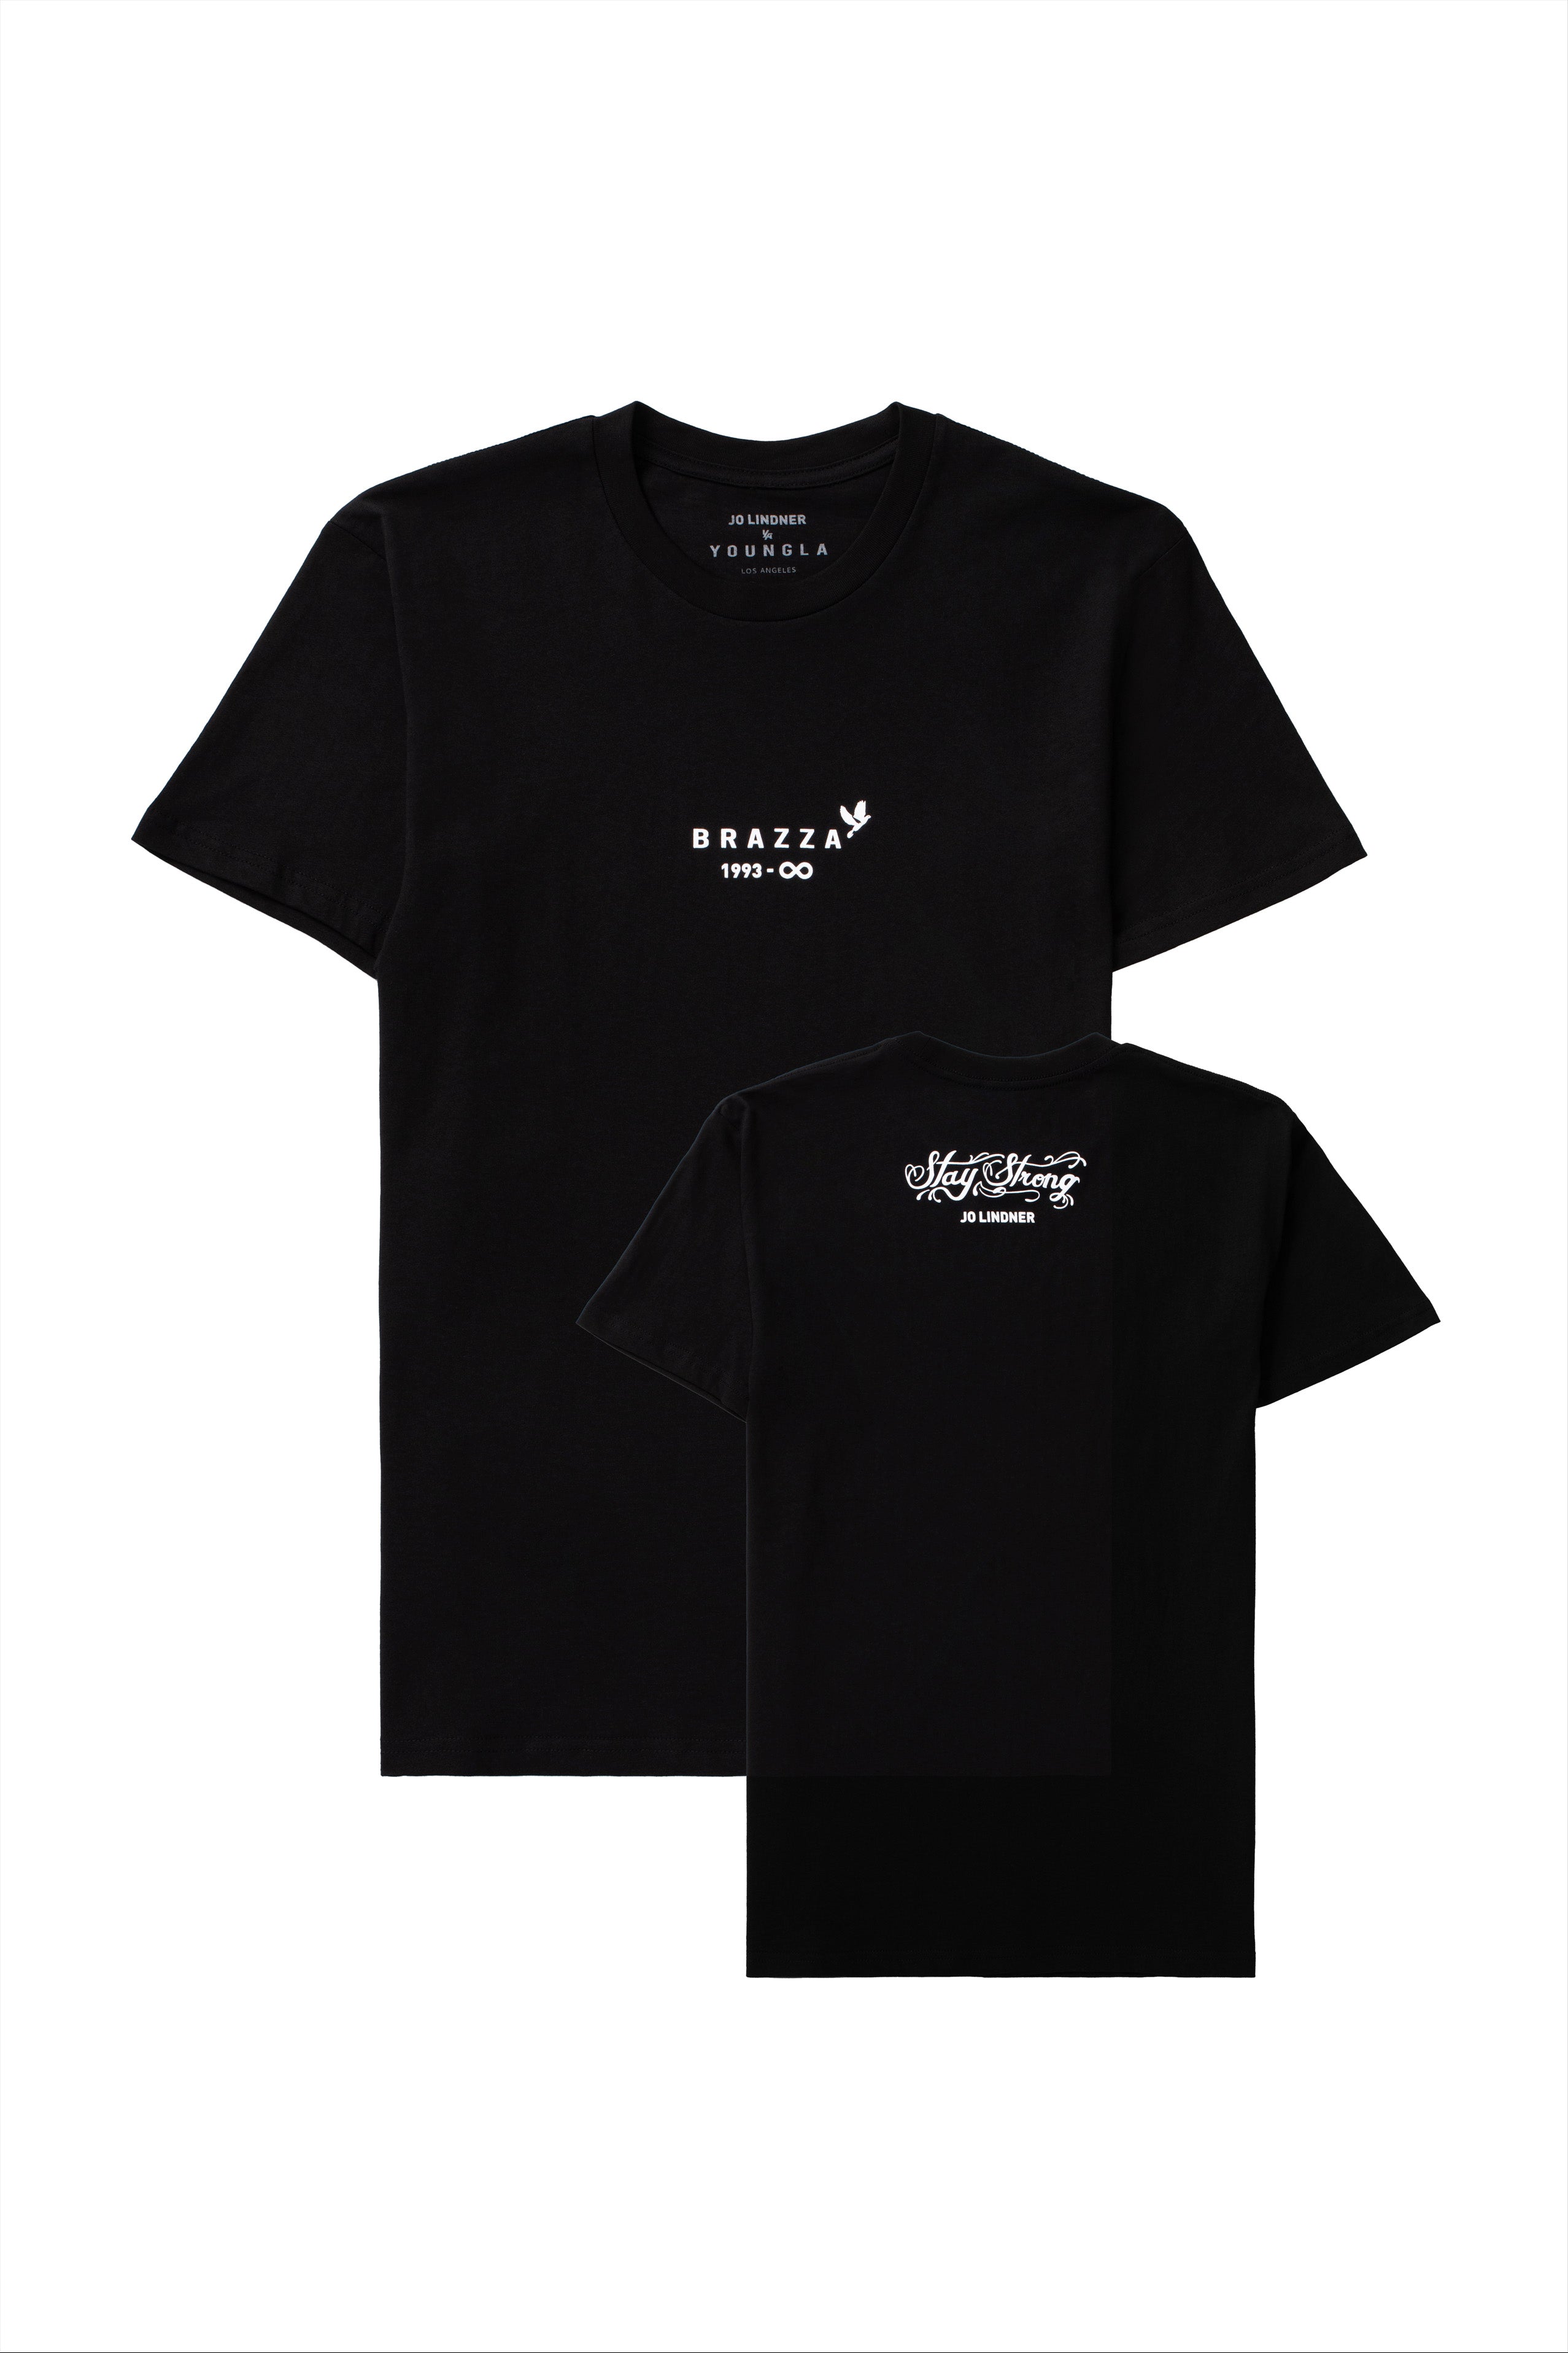 Nasty Nestor  Youth T-Shirt – Jomboy Media